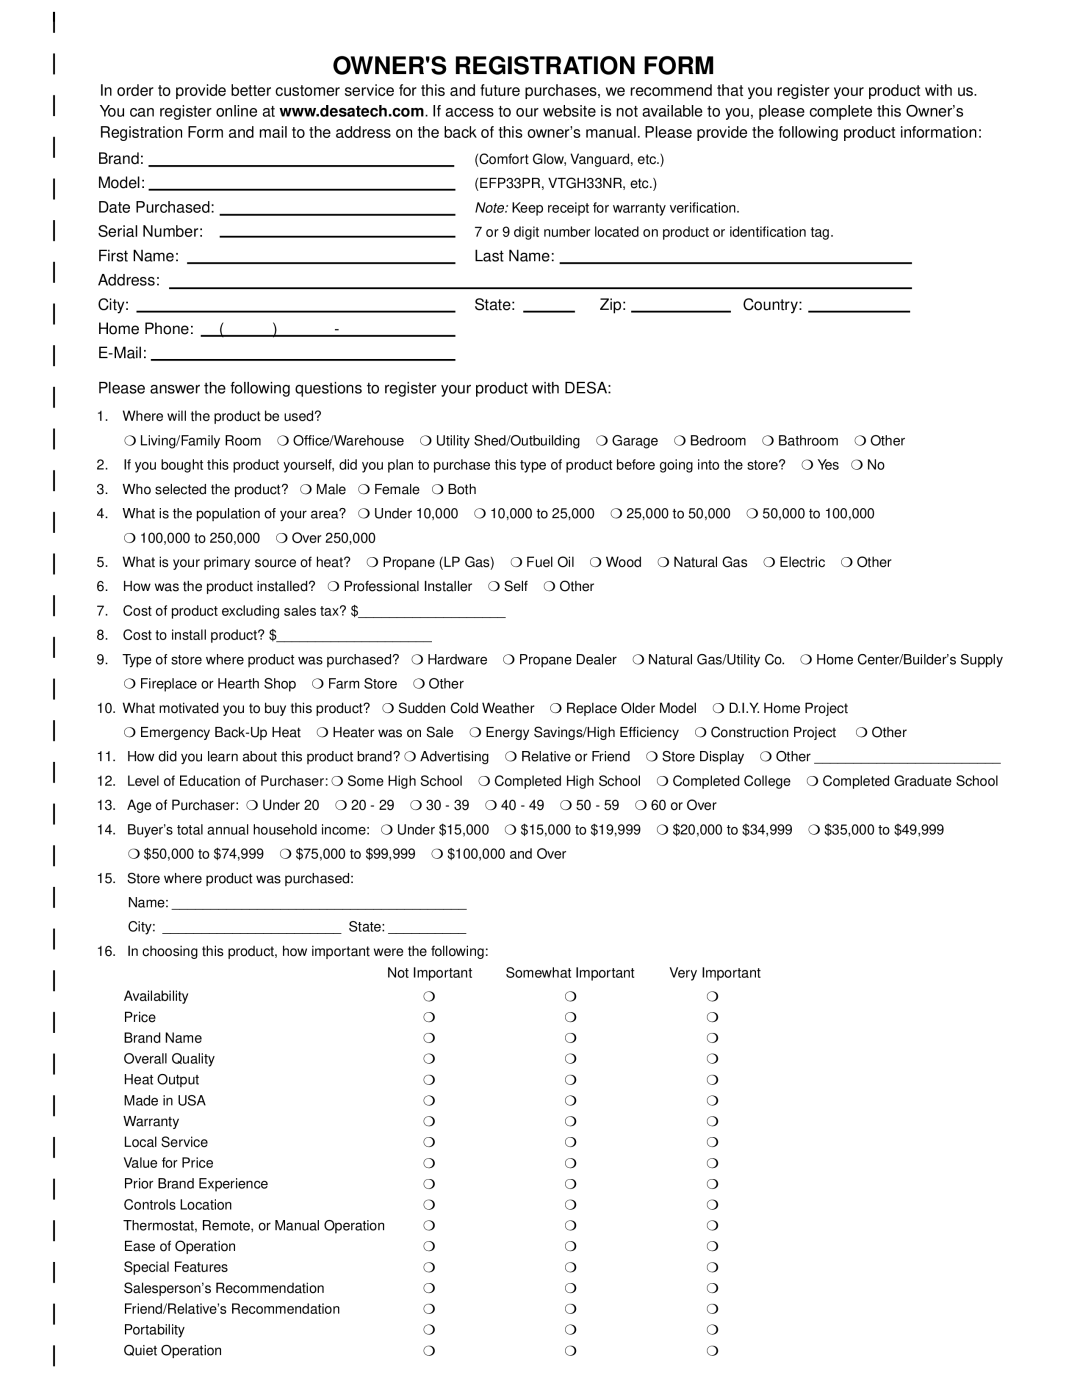 Desa CHDV36NRA installation manual Owners Registration Form 